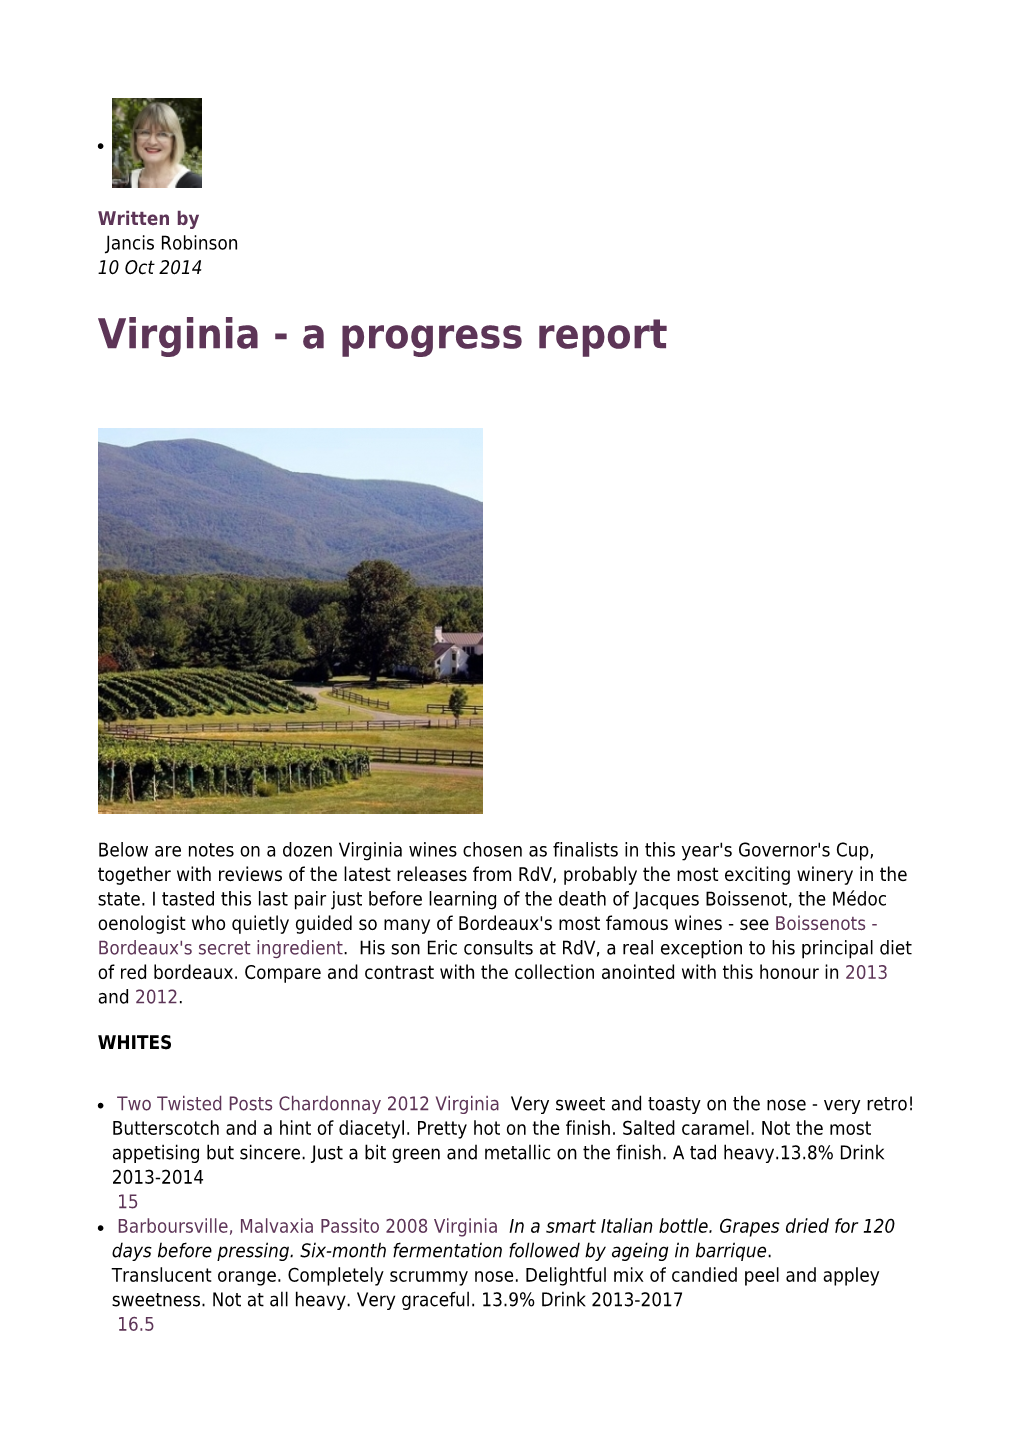 A Progress Report Jancis Robinson